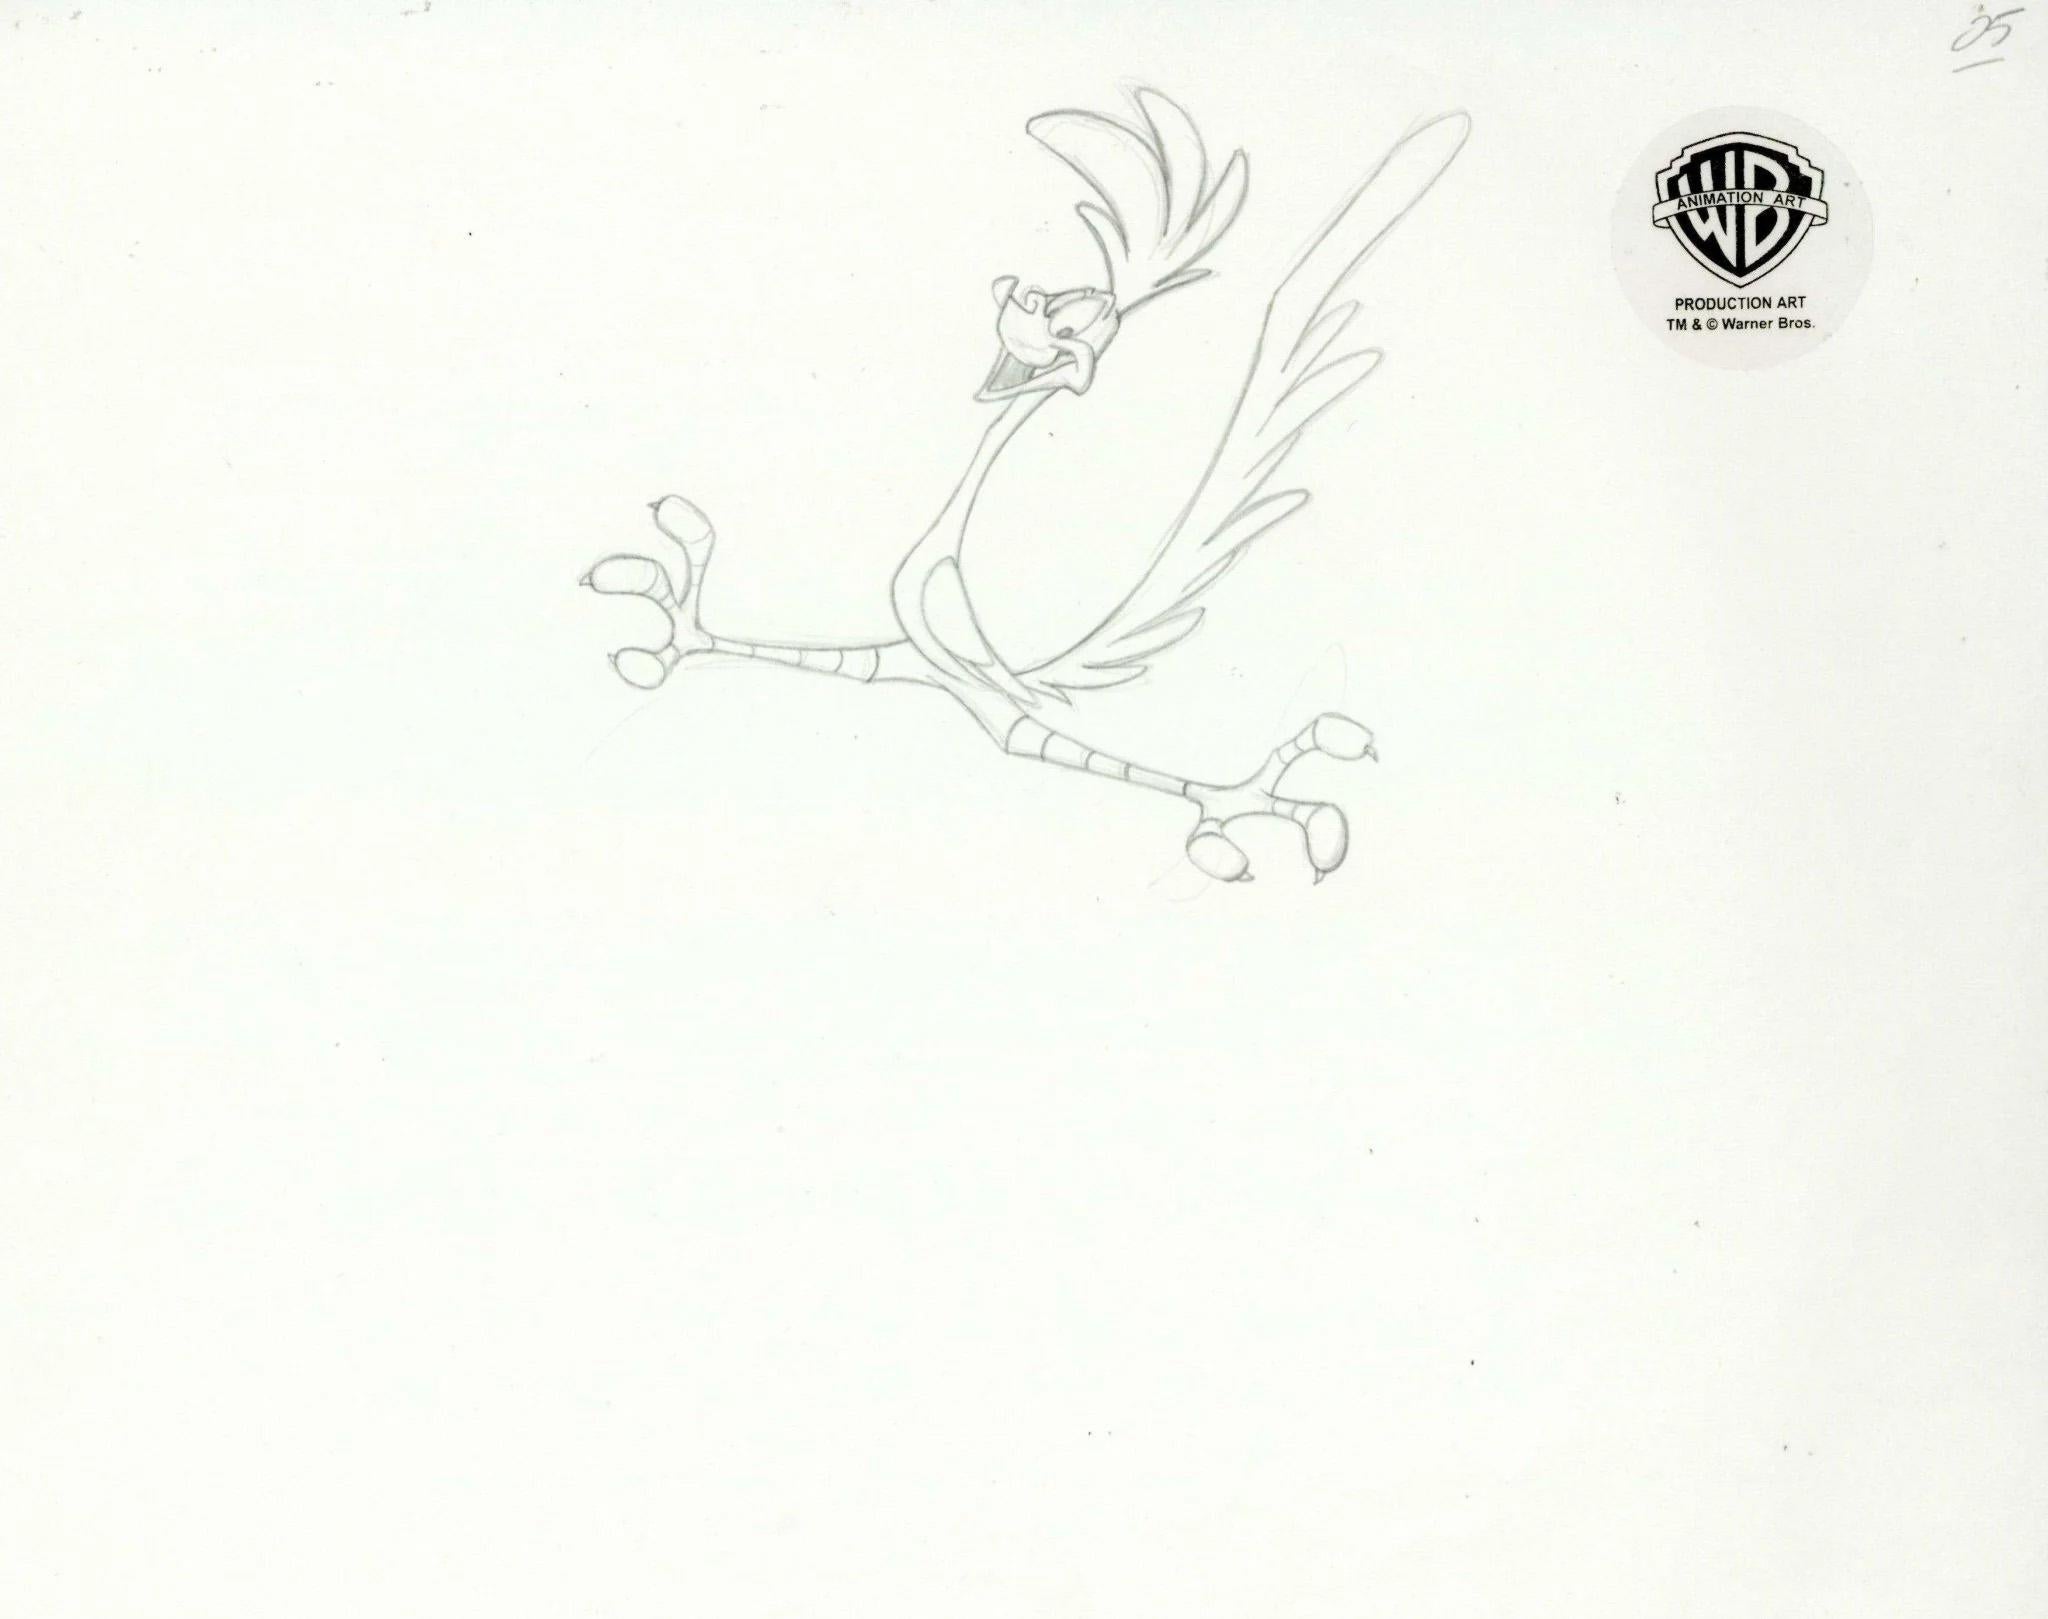 Looney Tunes dessin de production d'origine : Chemin de fer - Art de Looney Tunes Studio Artists